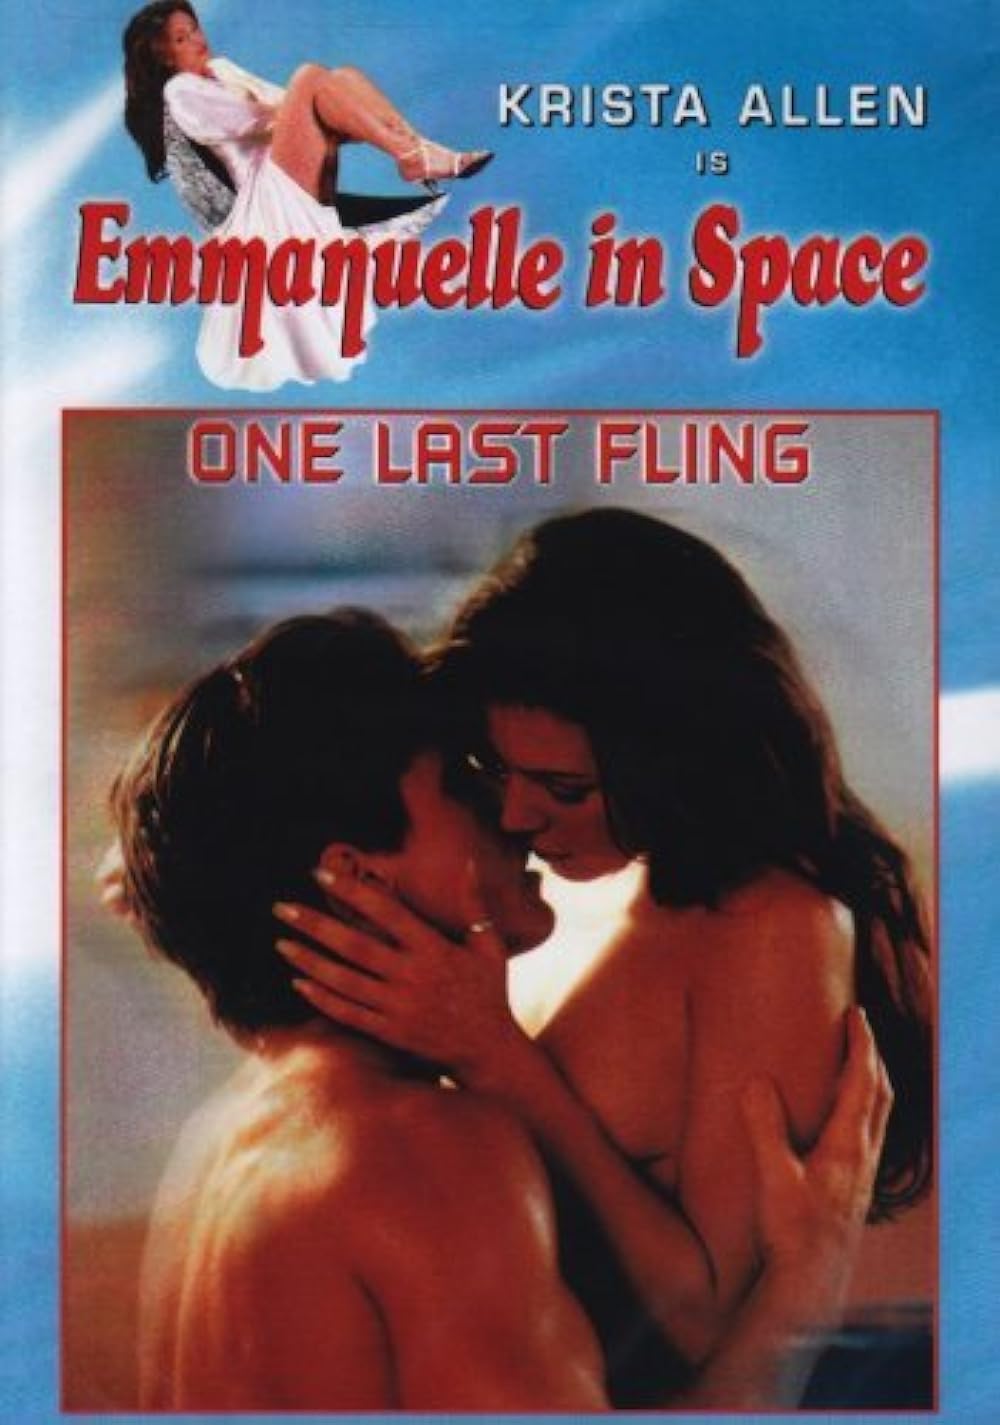 Best of Emmanuelle in space movie